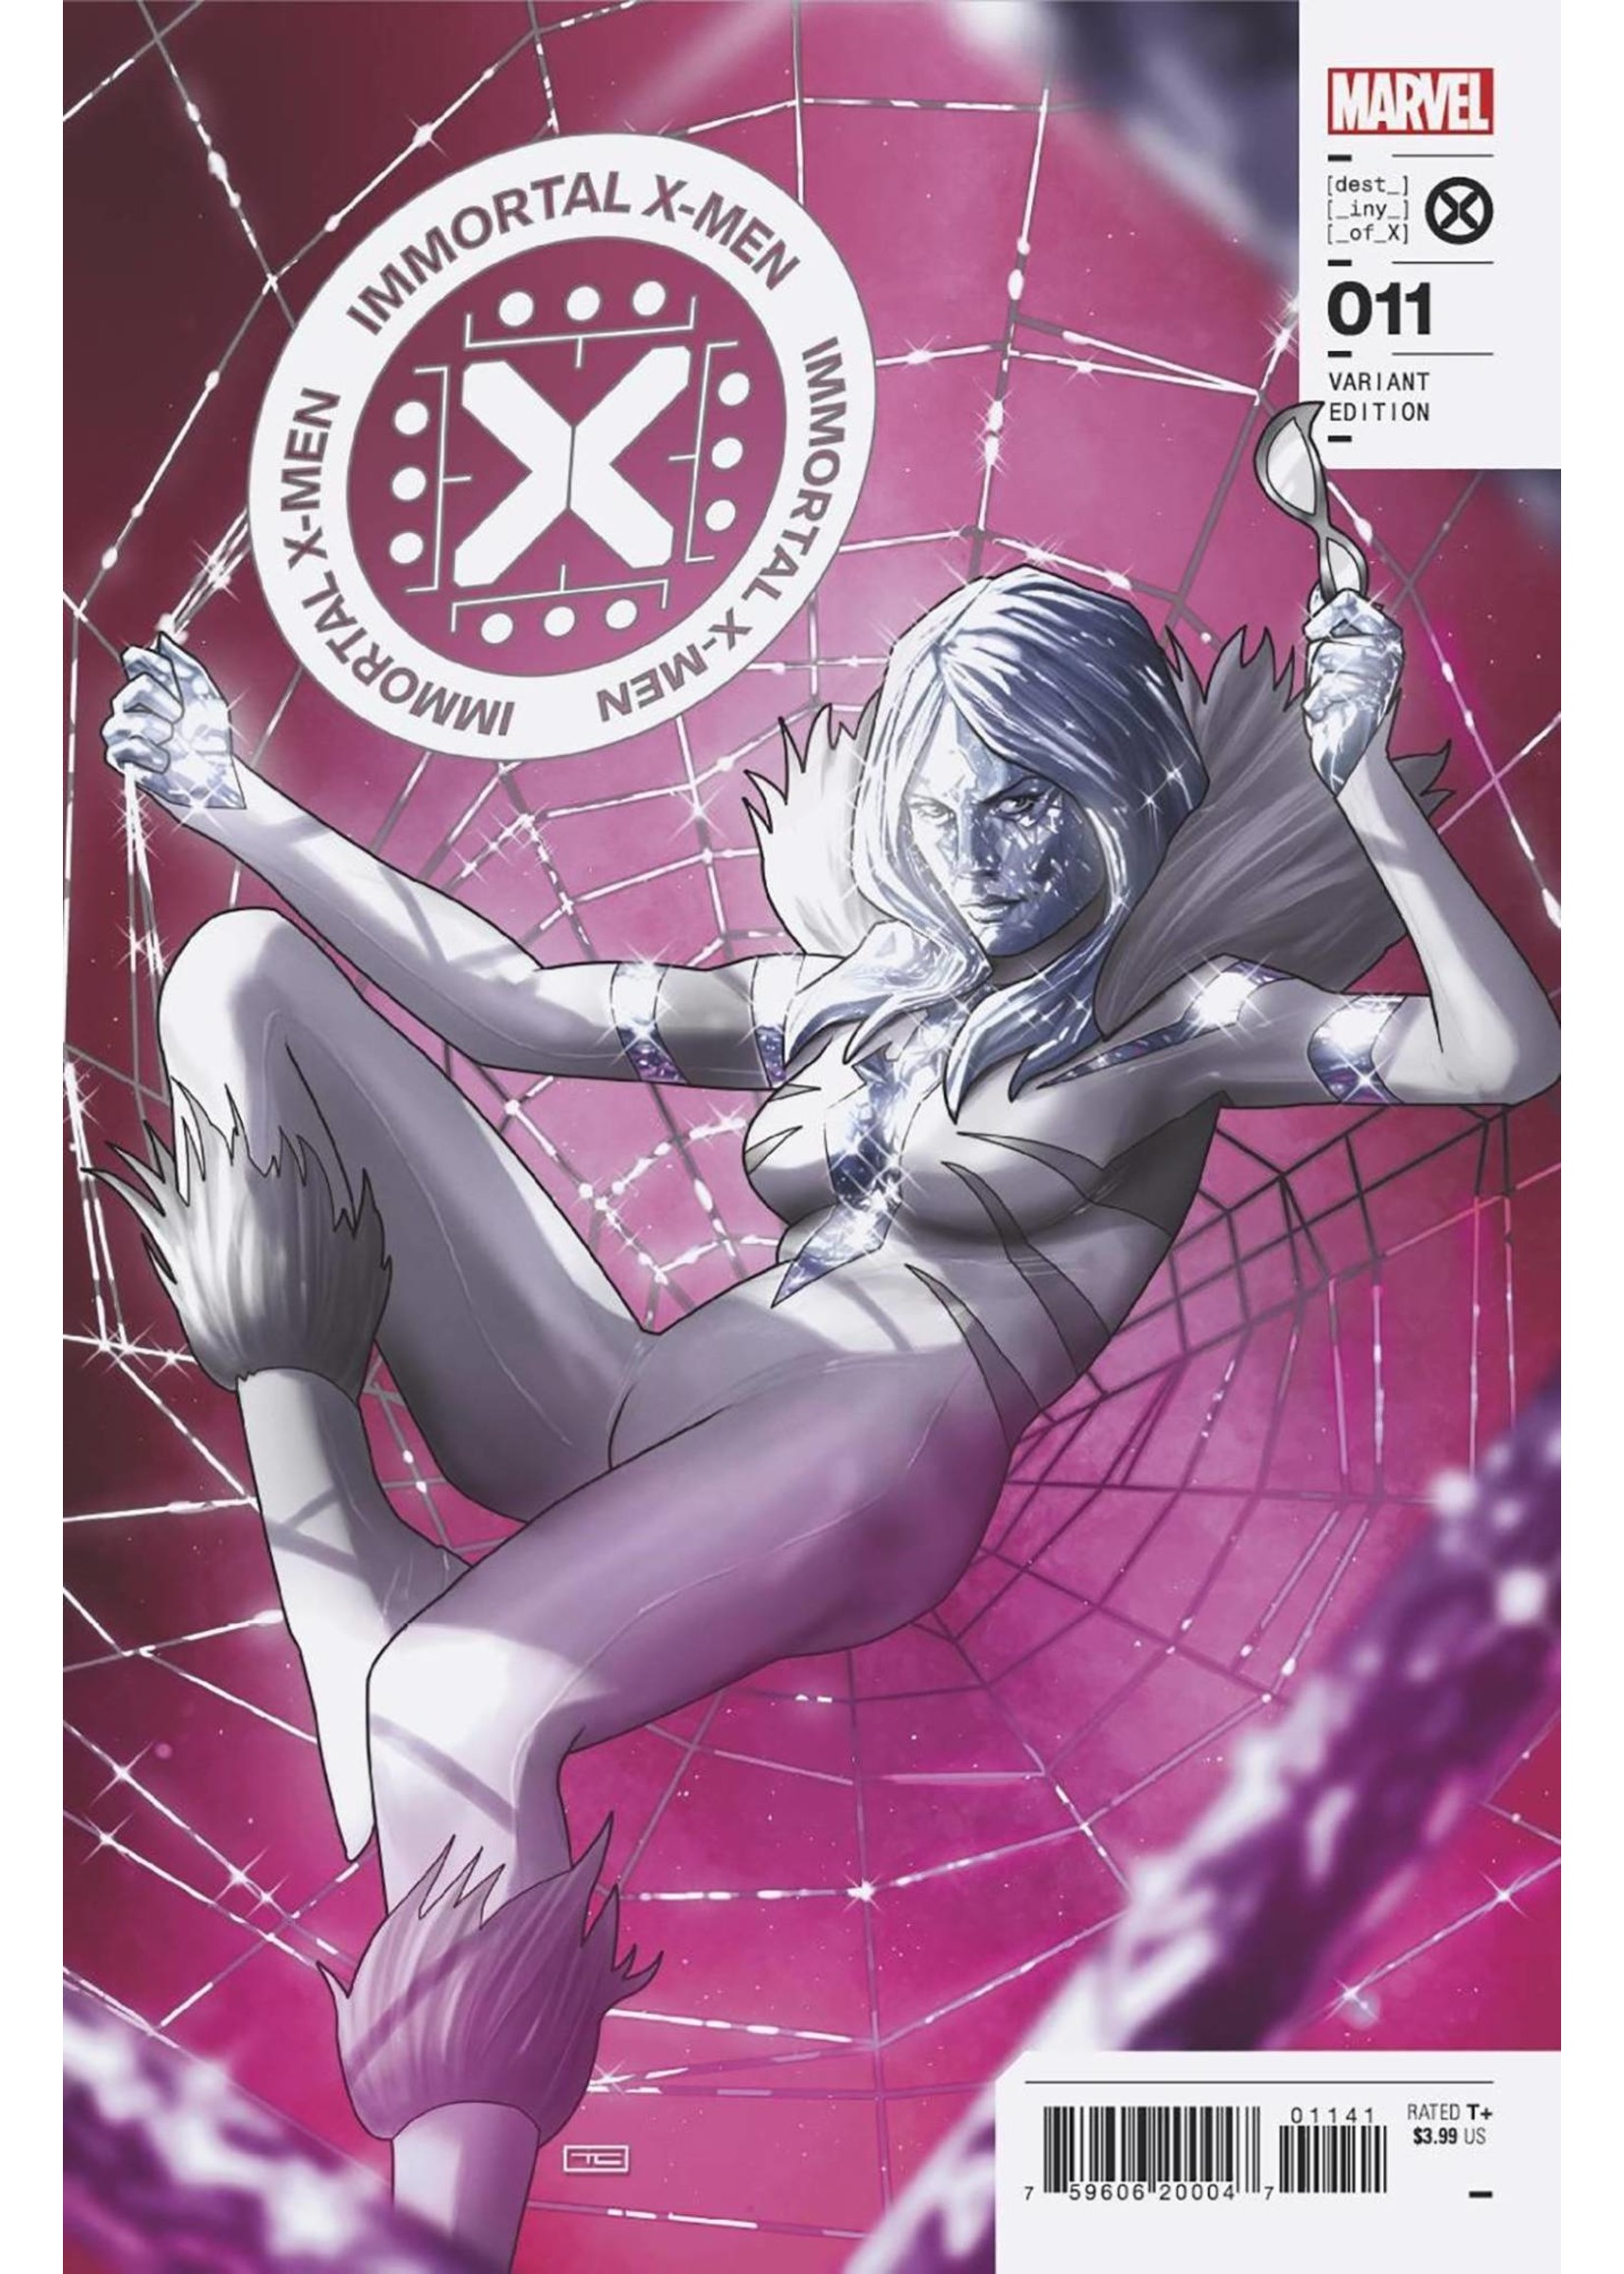 MARVEL COMICS IMMORTAL X-MEN #11 TAURIN CLARKE SPIDER-VERSE VARI